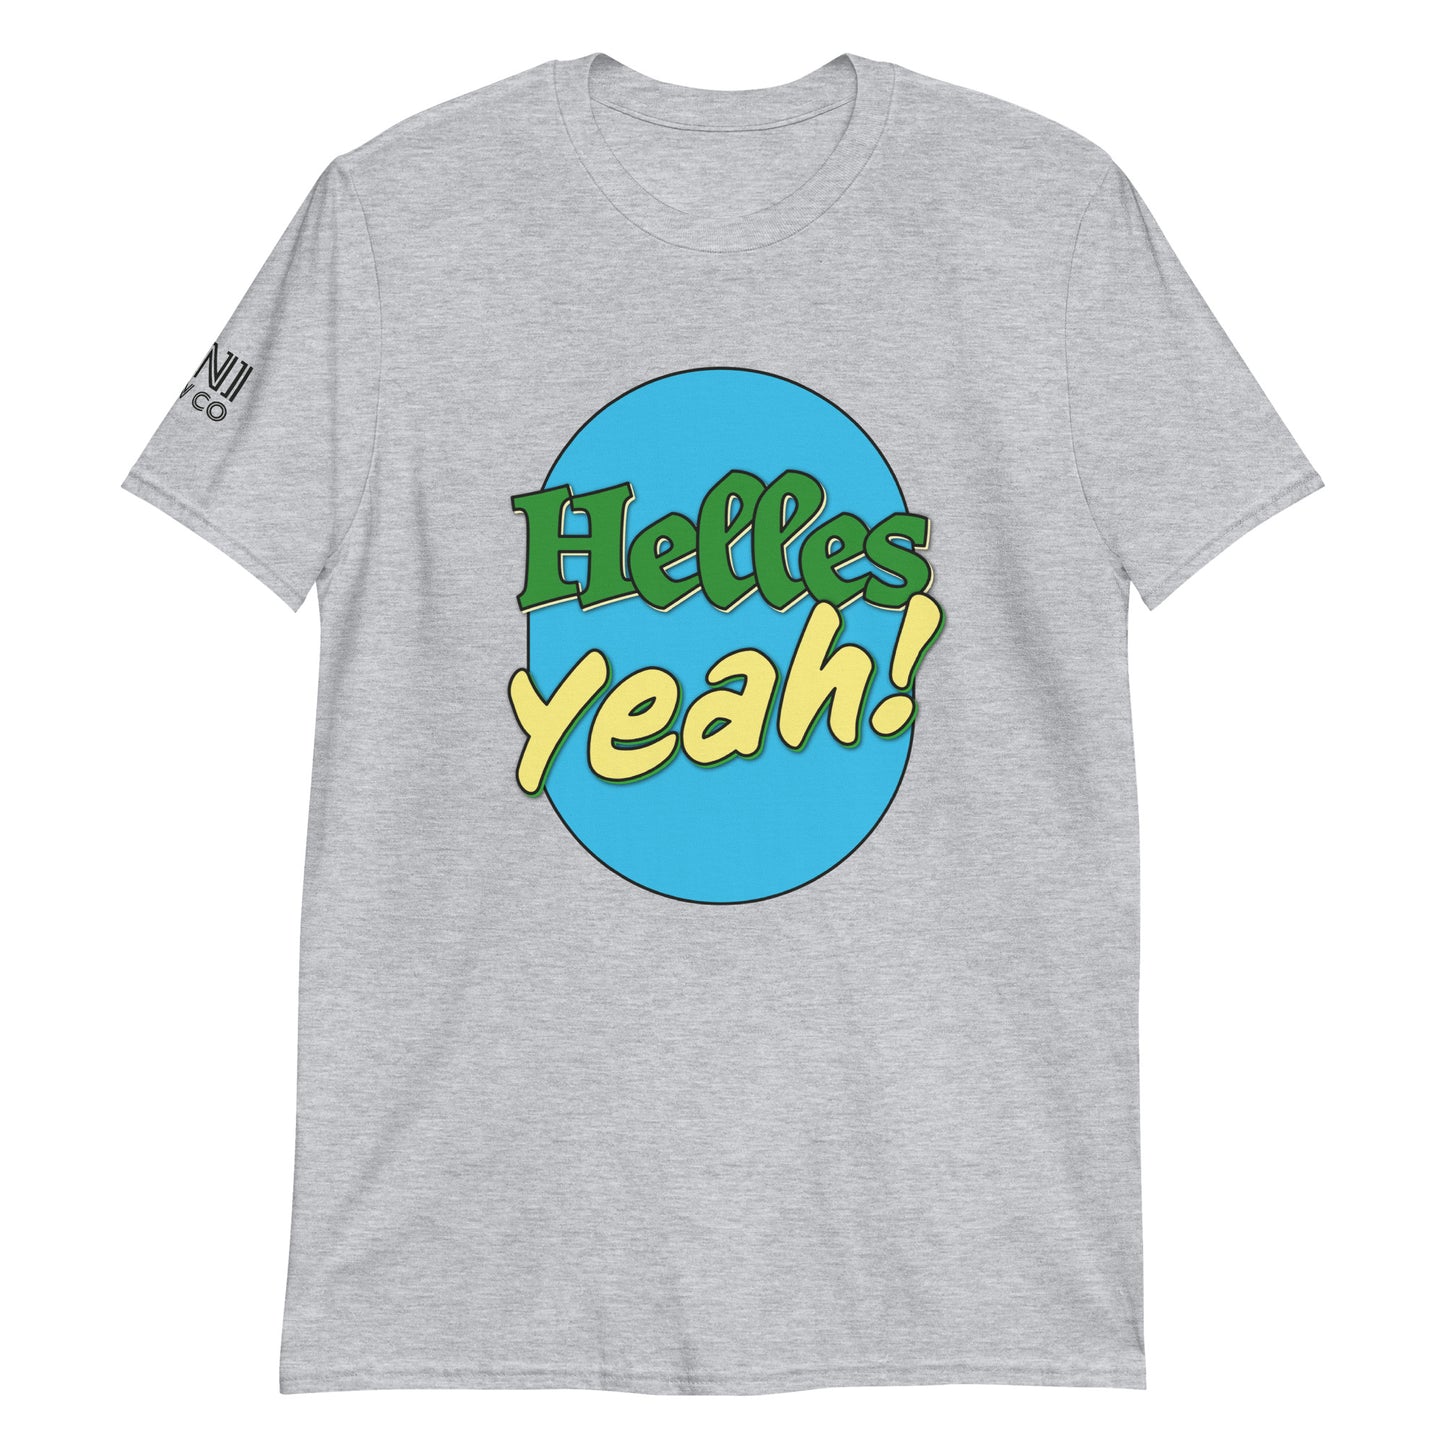 Helles Yeah Short-Sleeve Unisex T-Shirt